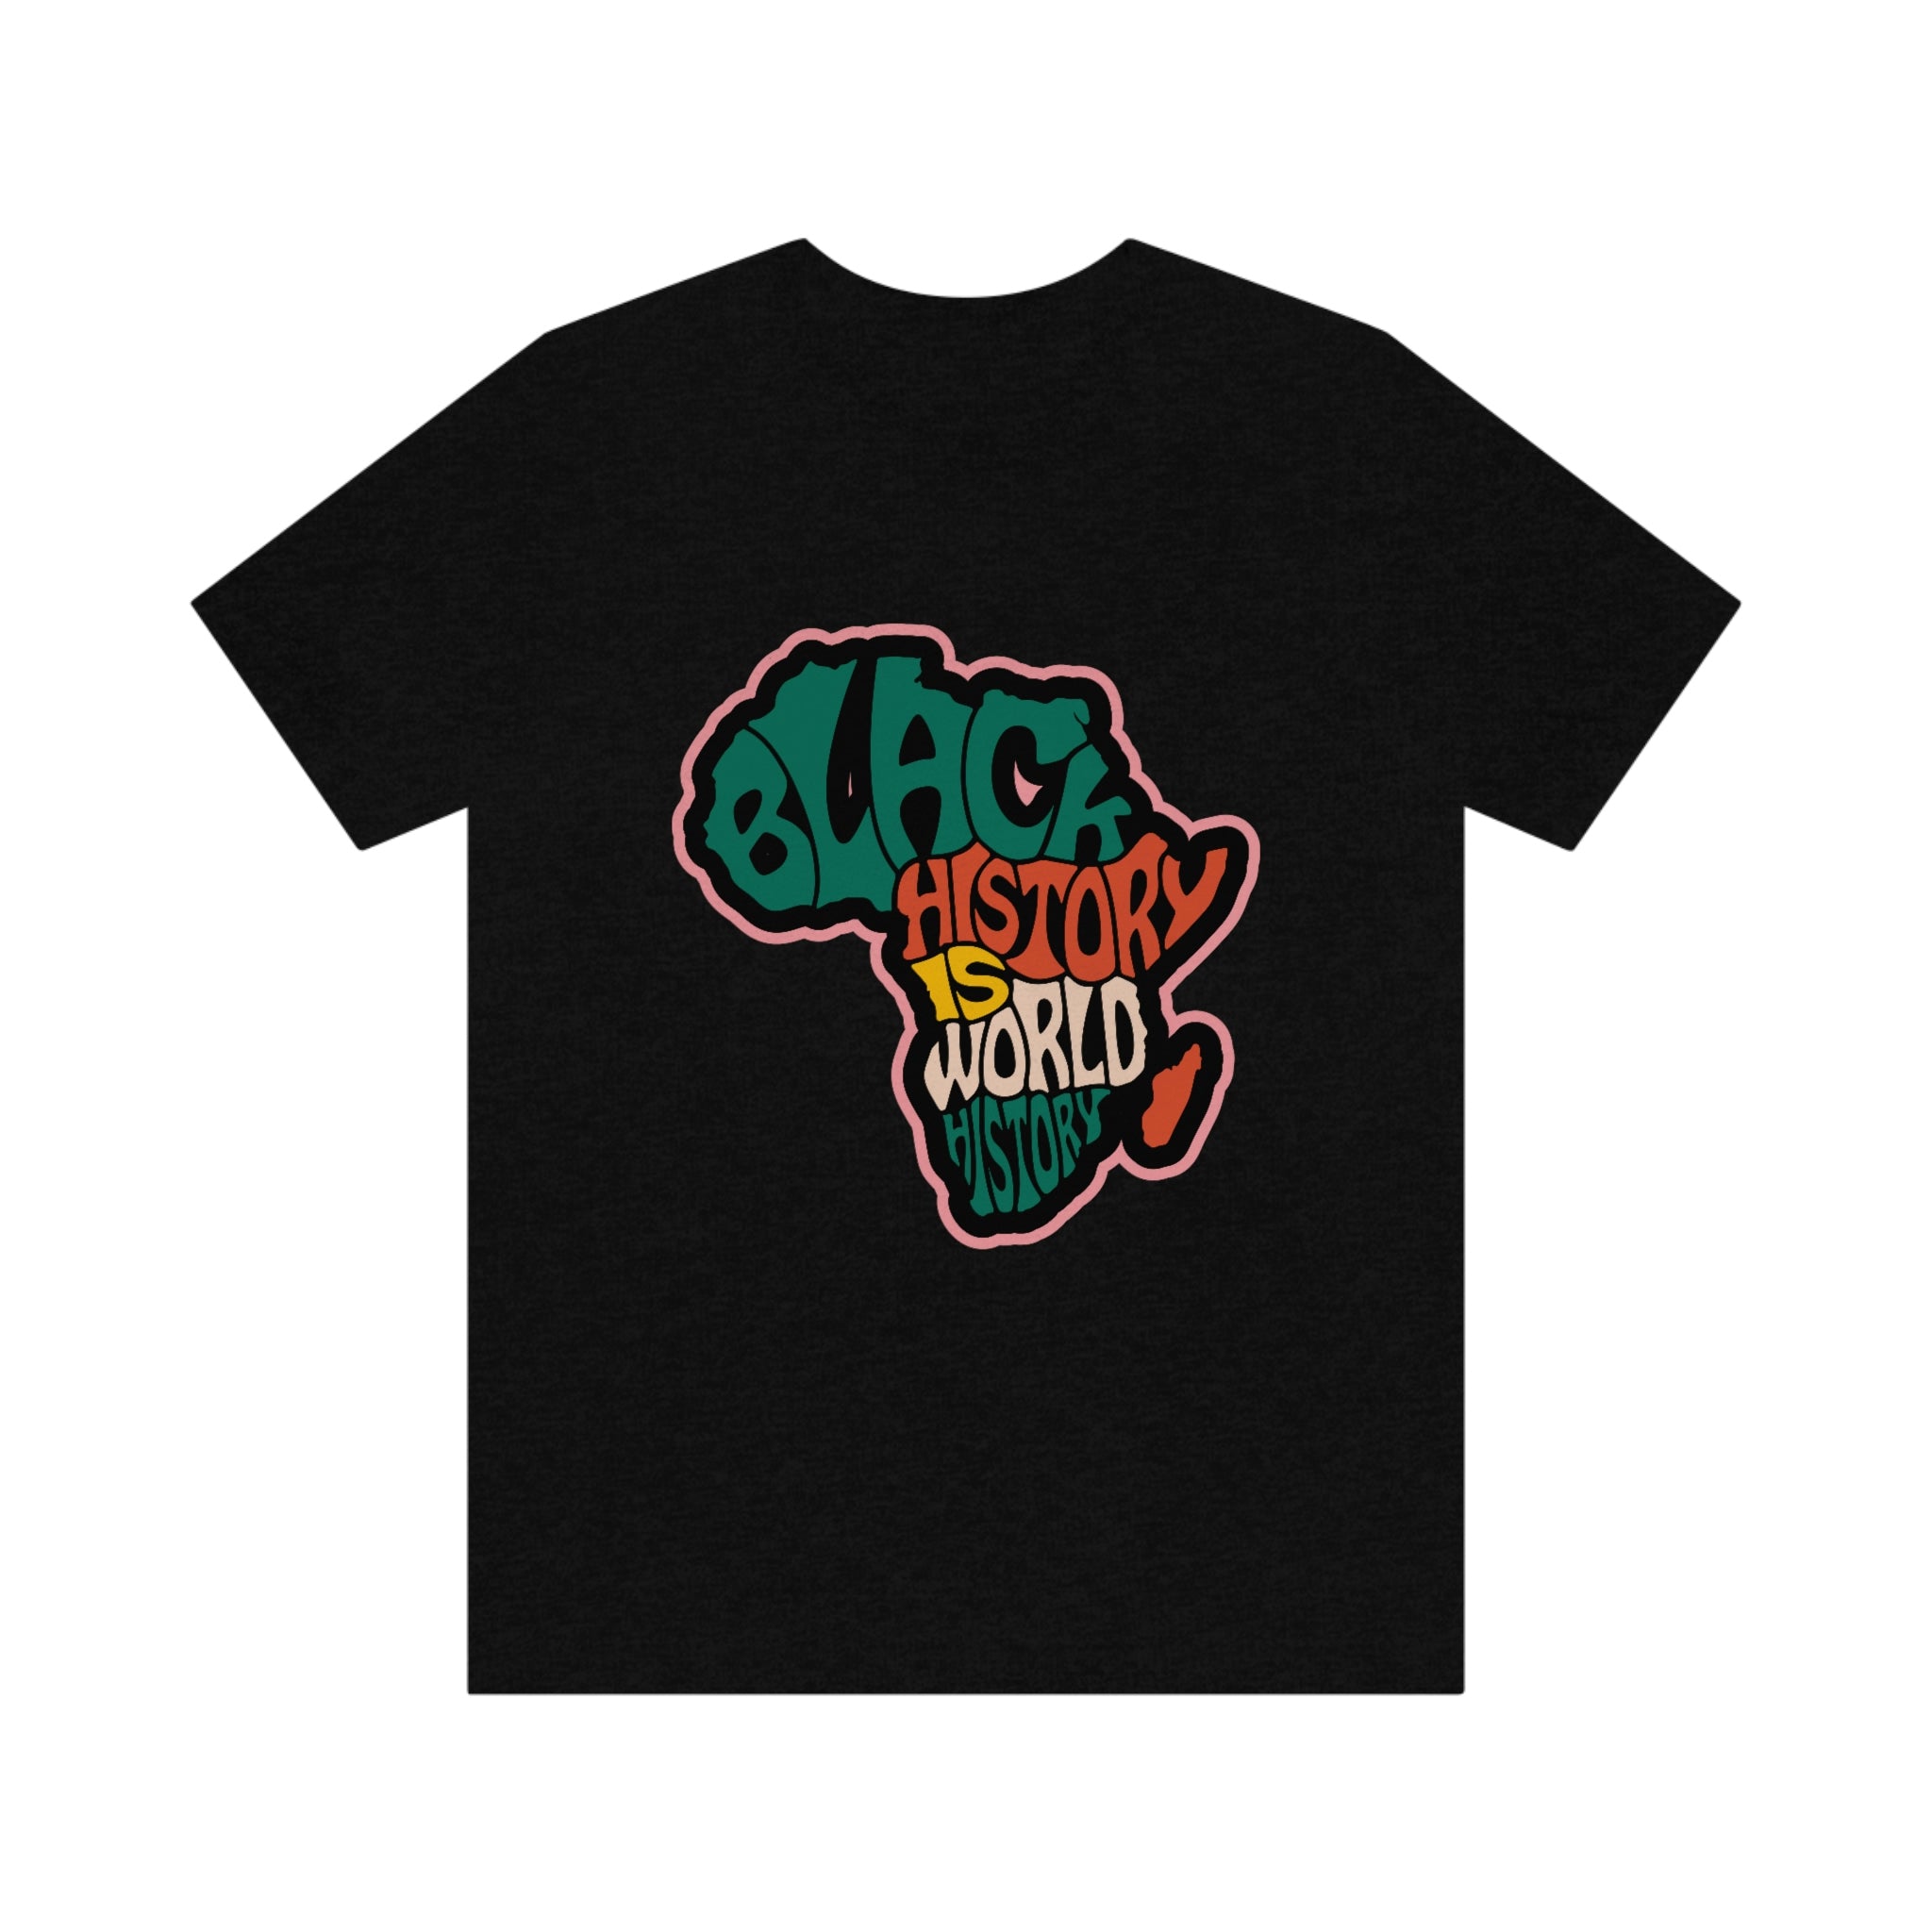 Black History is World History T-shirt